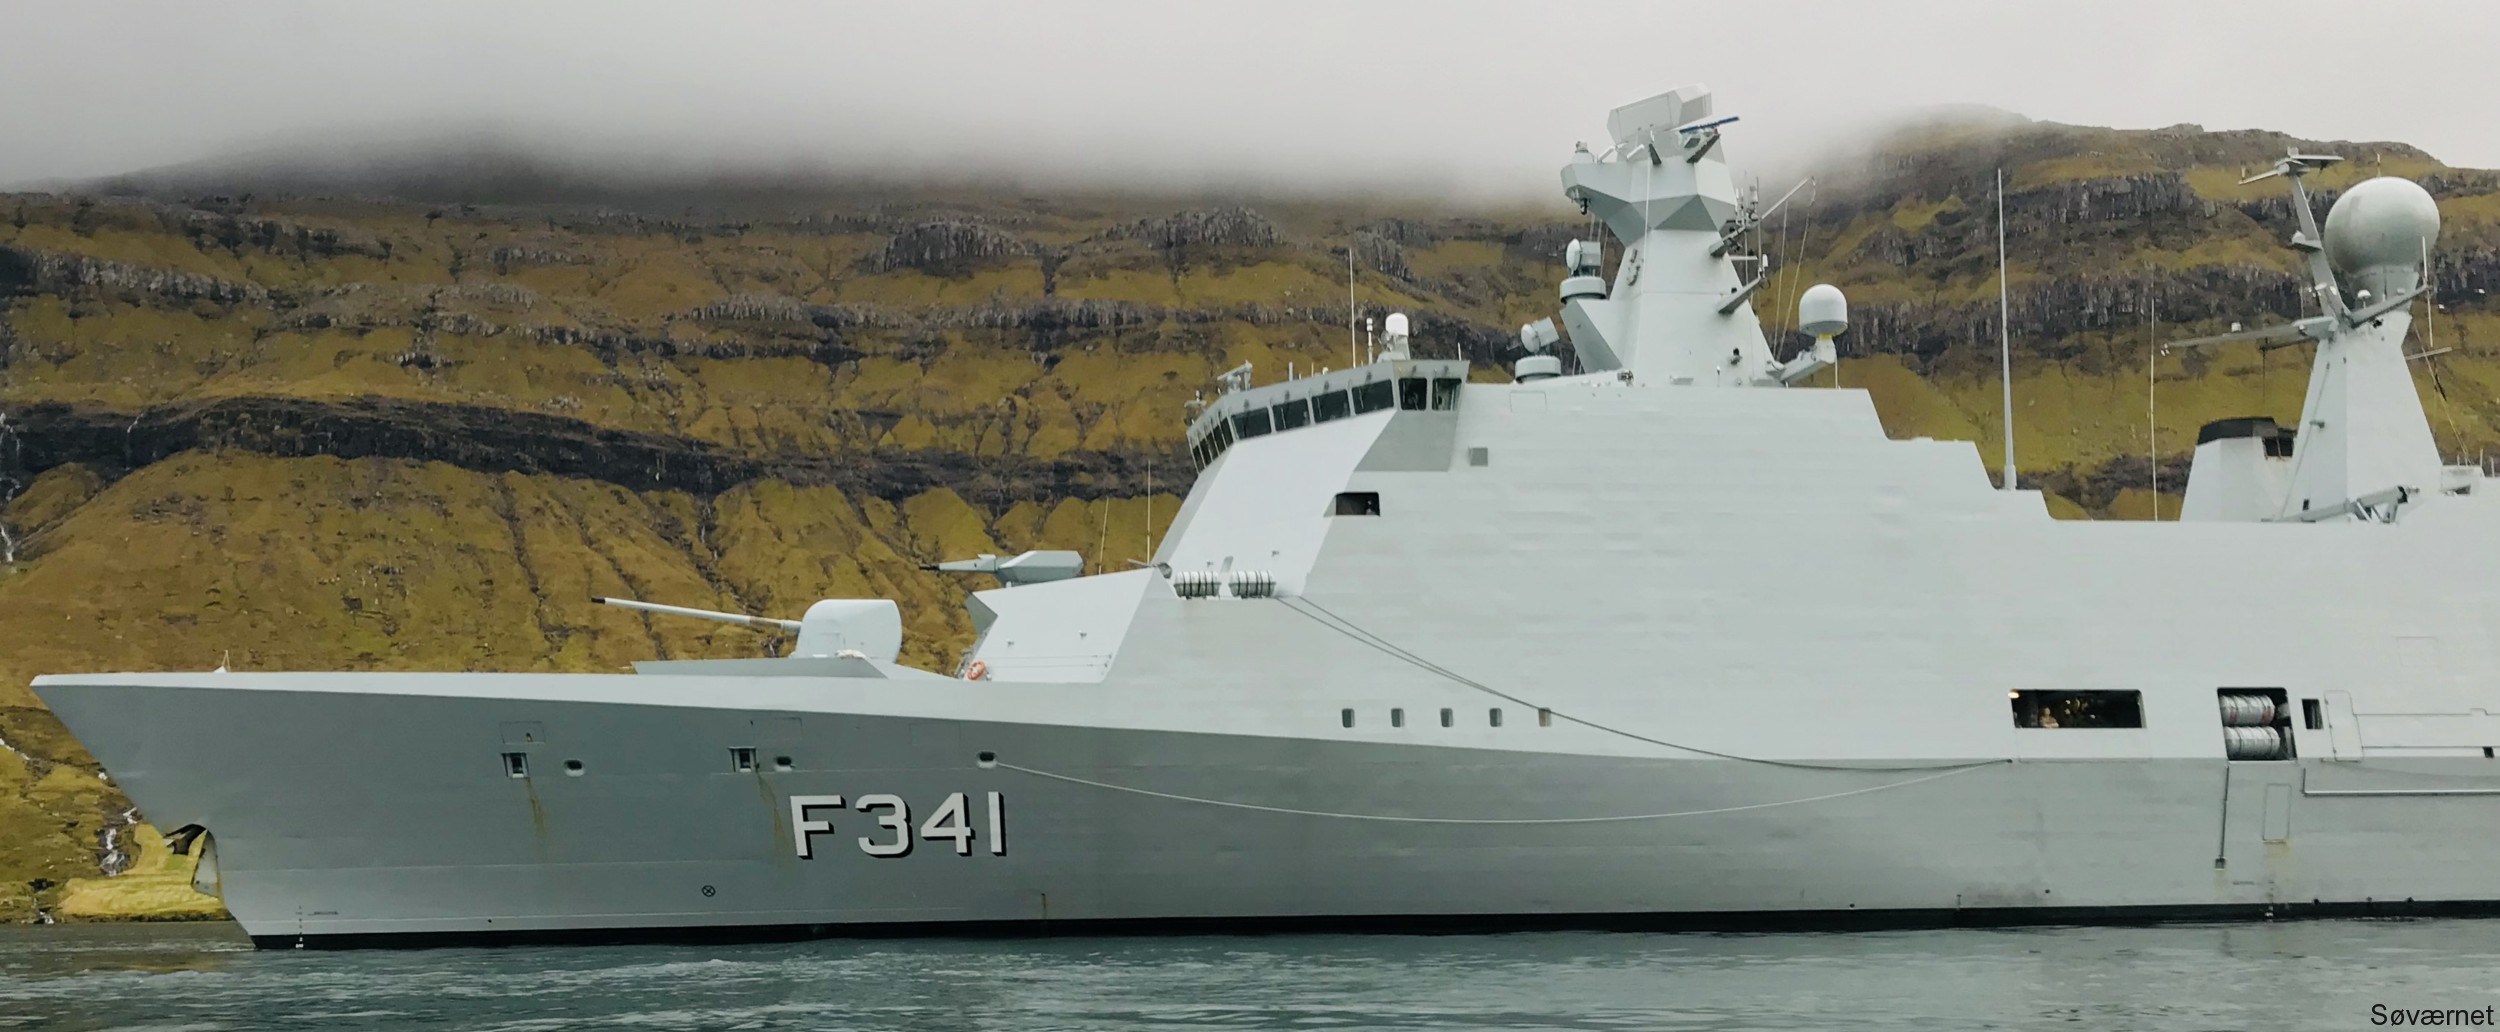 f-341 hdms absalon frigate royal danish navy 07